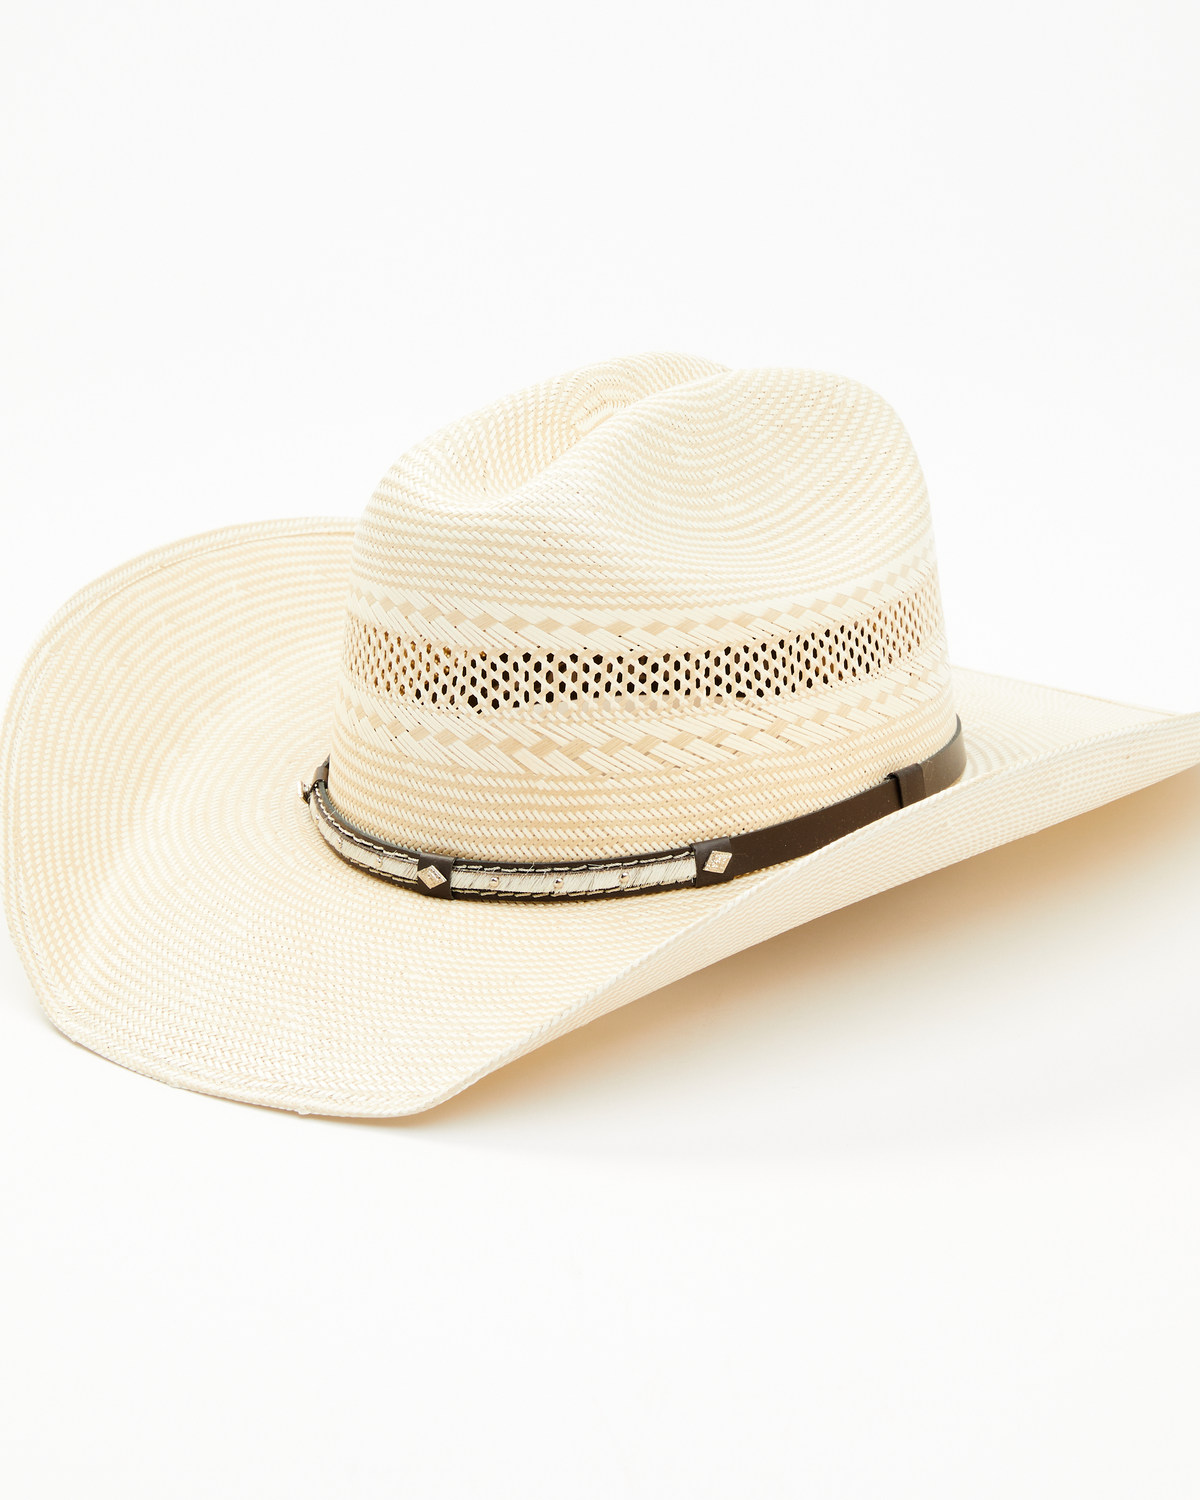 Peter Grimm Colt Straw Cowboy Hat